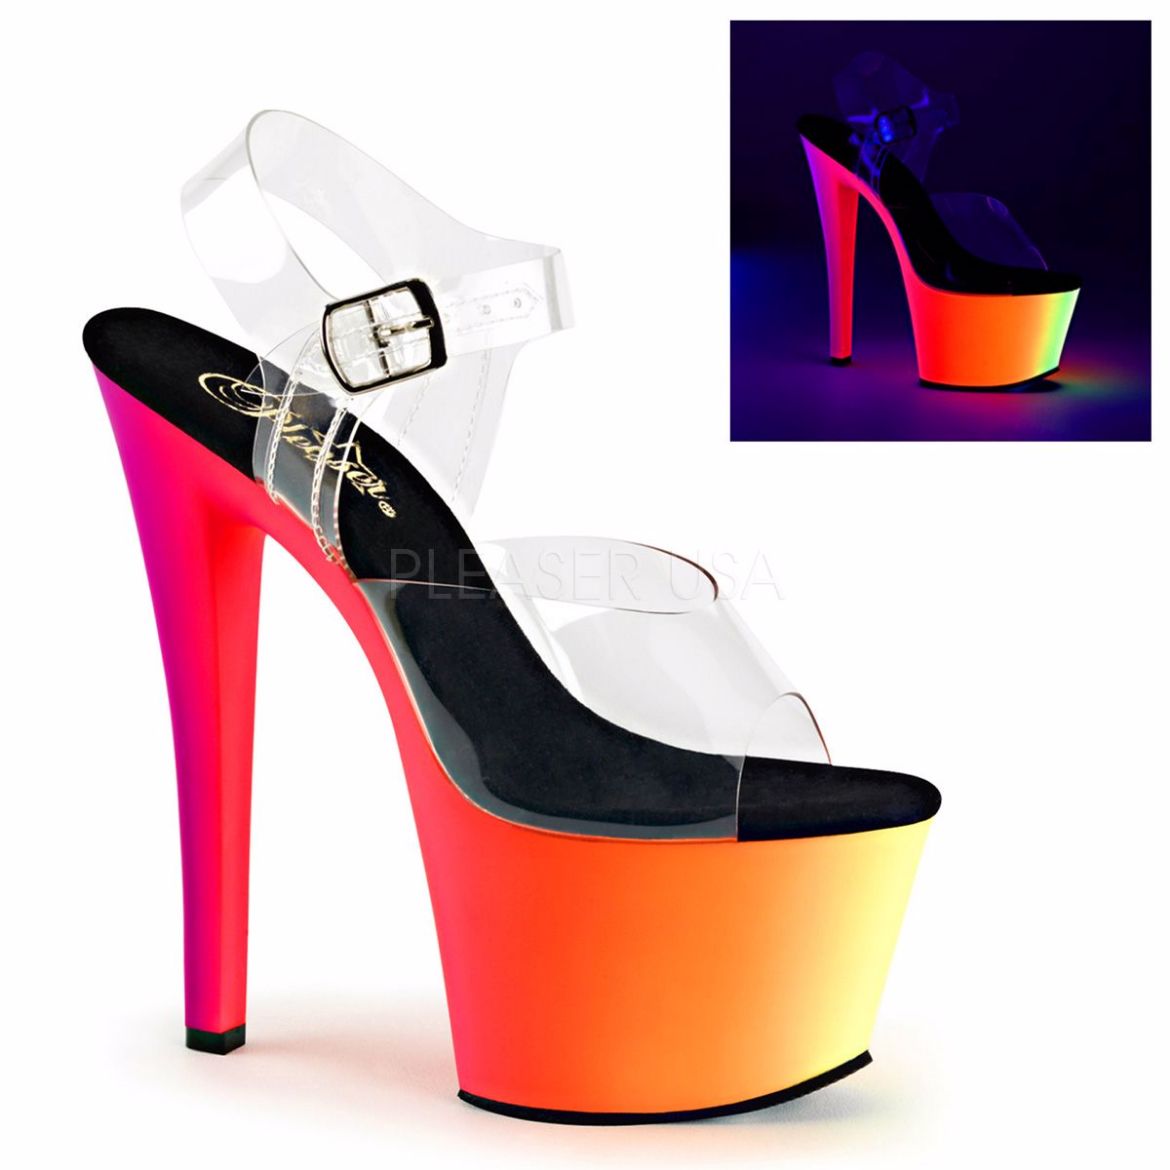 Product image of Pleaser Rainbow-308Uv Clear/Neon Multi, 7 inch (17.8 cm) Heel, 2 3/4 inch (7 cm) Platform Sandal Shoes